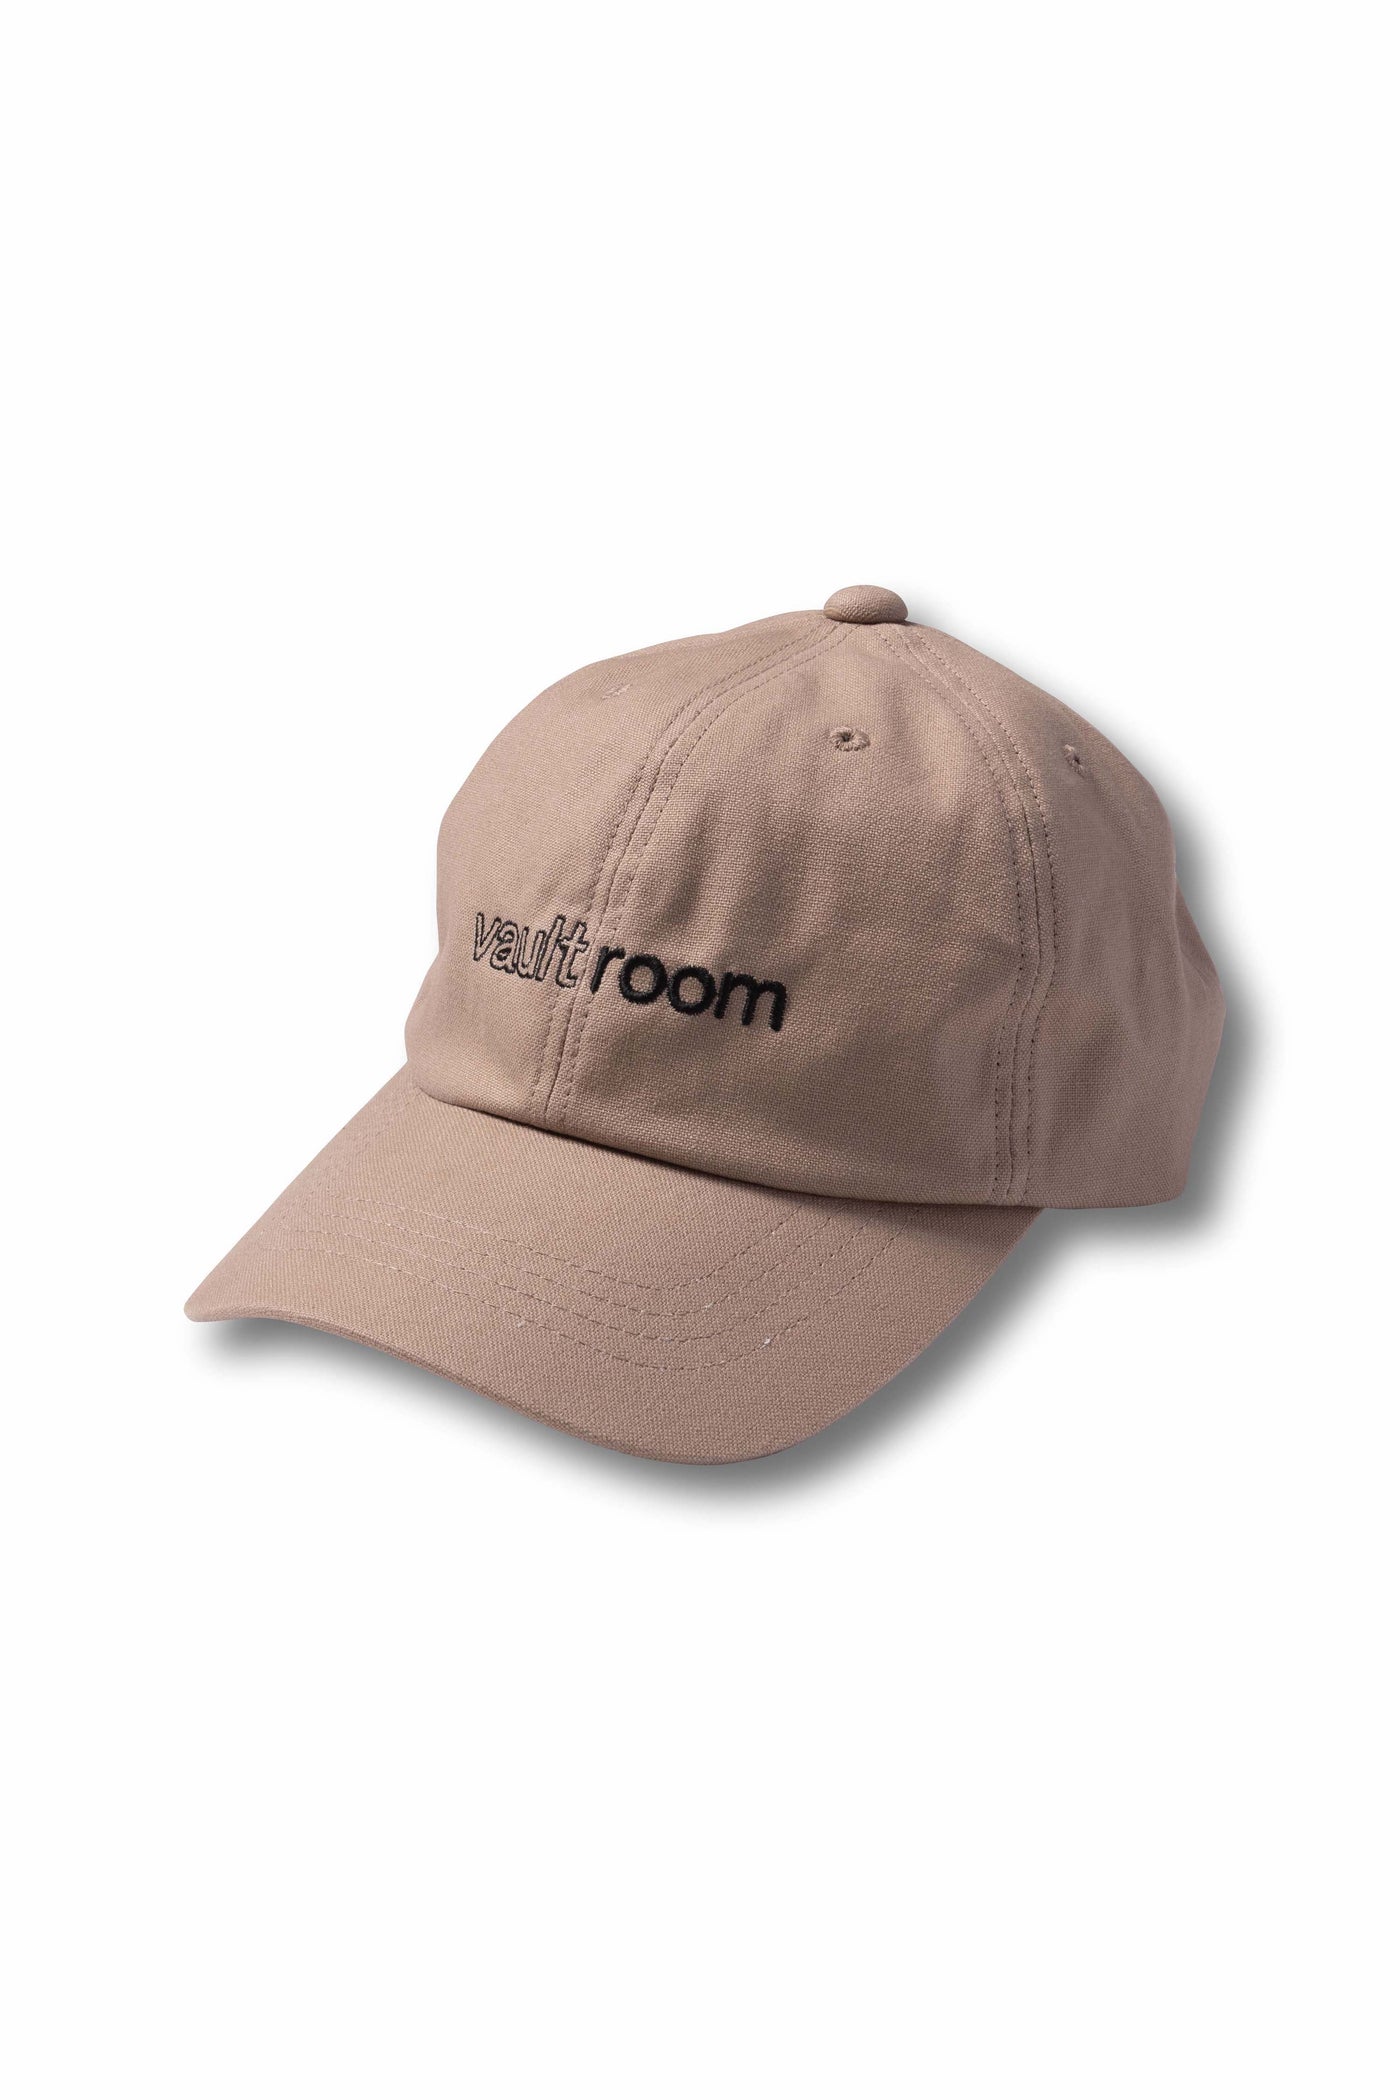 vaultroom LOGO CAP BGE - キャップ